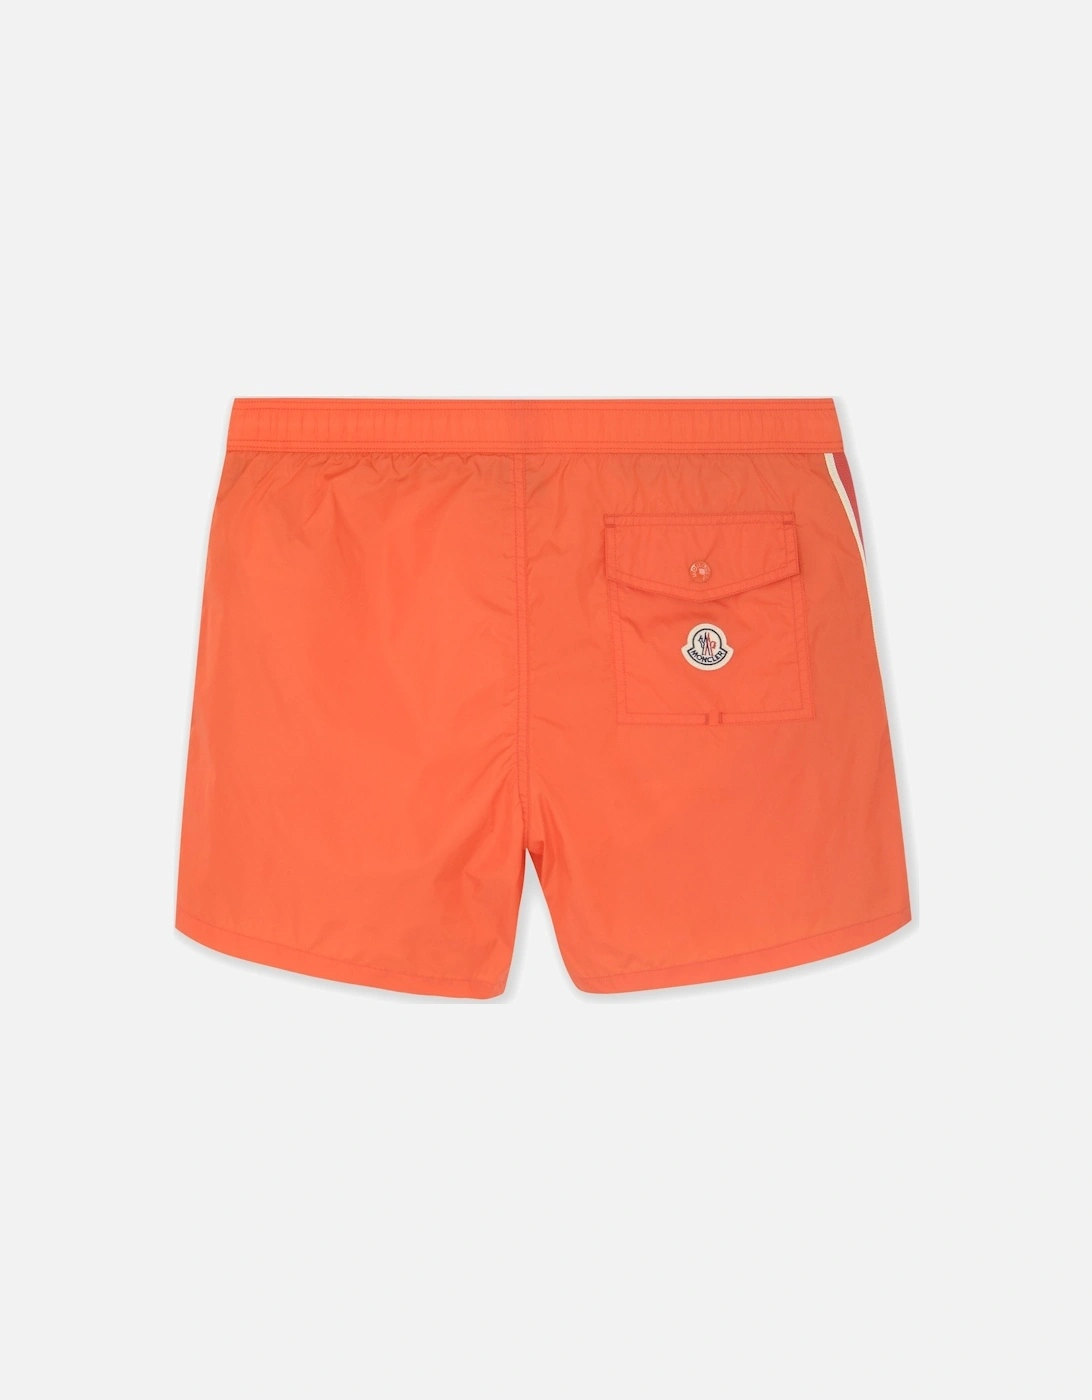 Classic Branded Swimshorts Orange